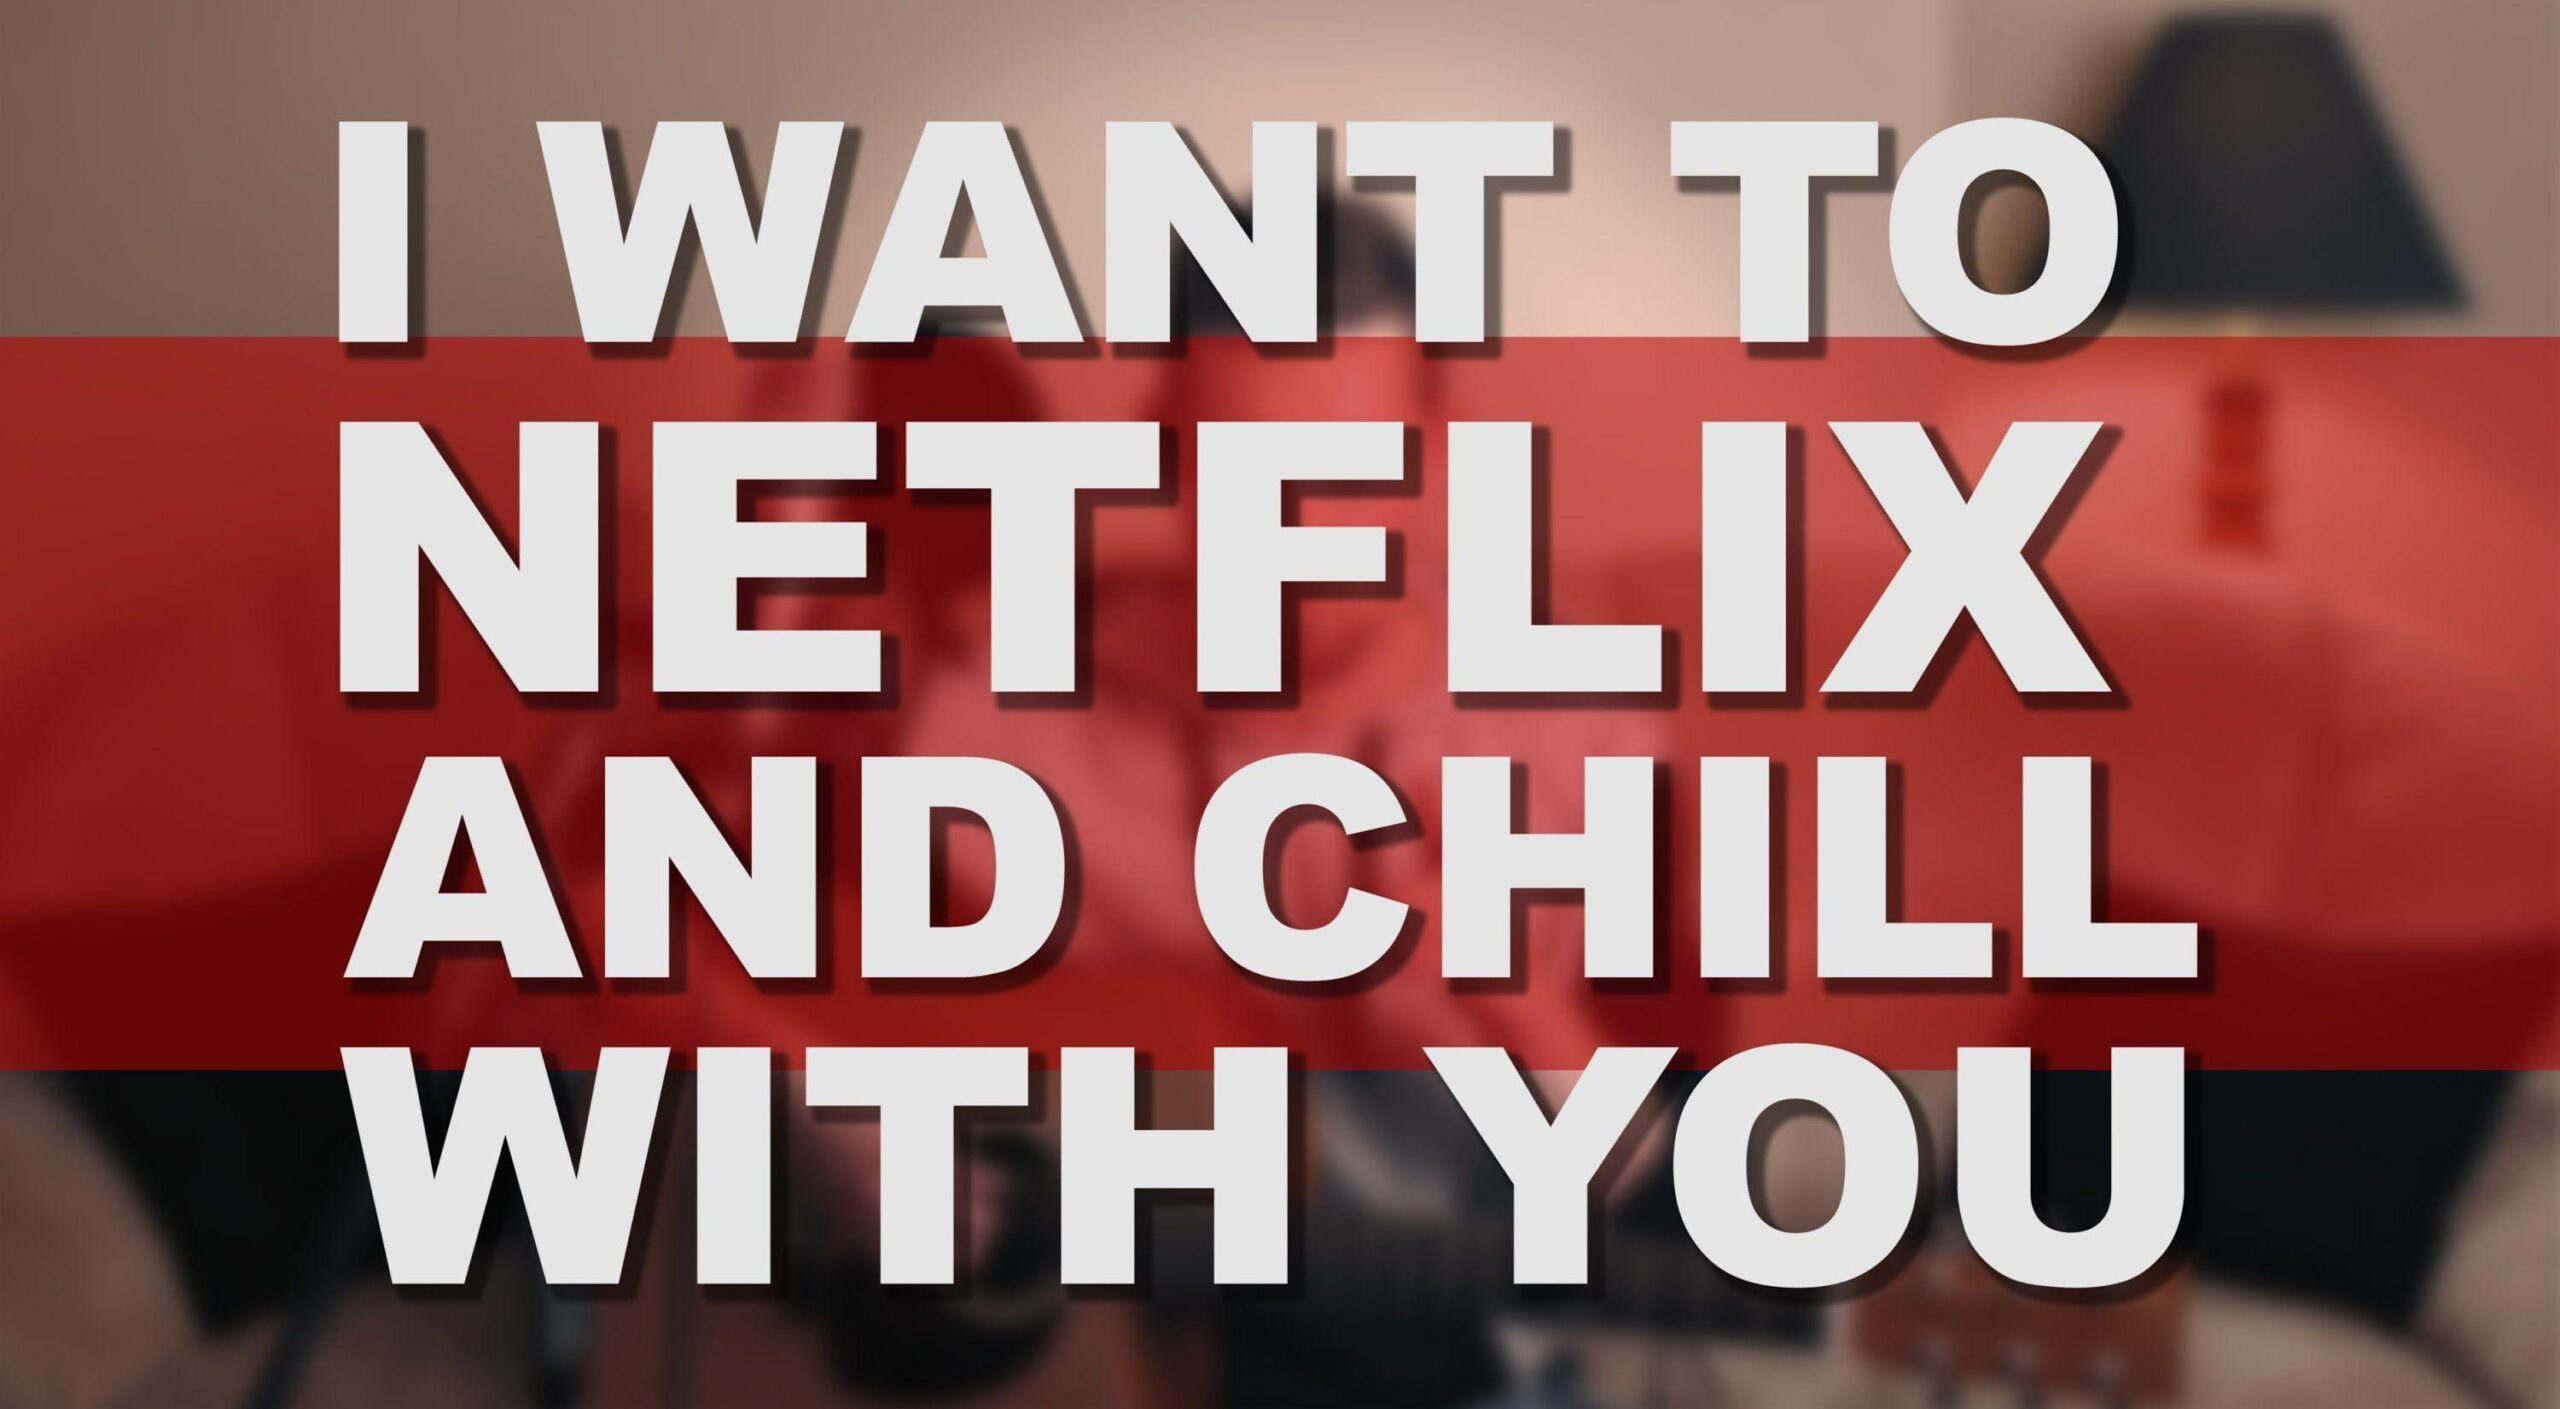 Netflix Hd Wallpapers Free Download, Netflix, Other